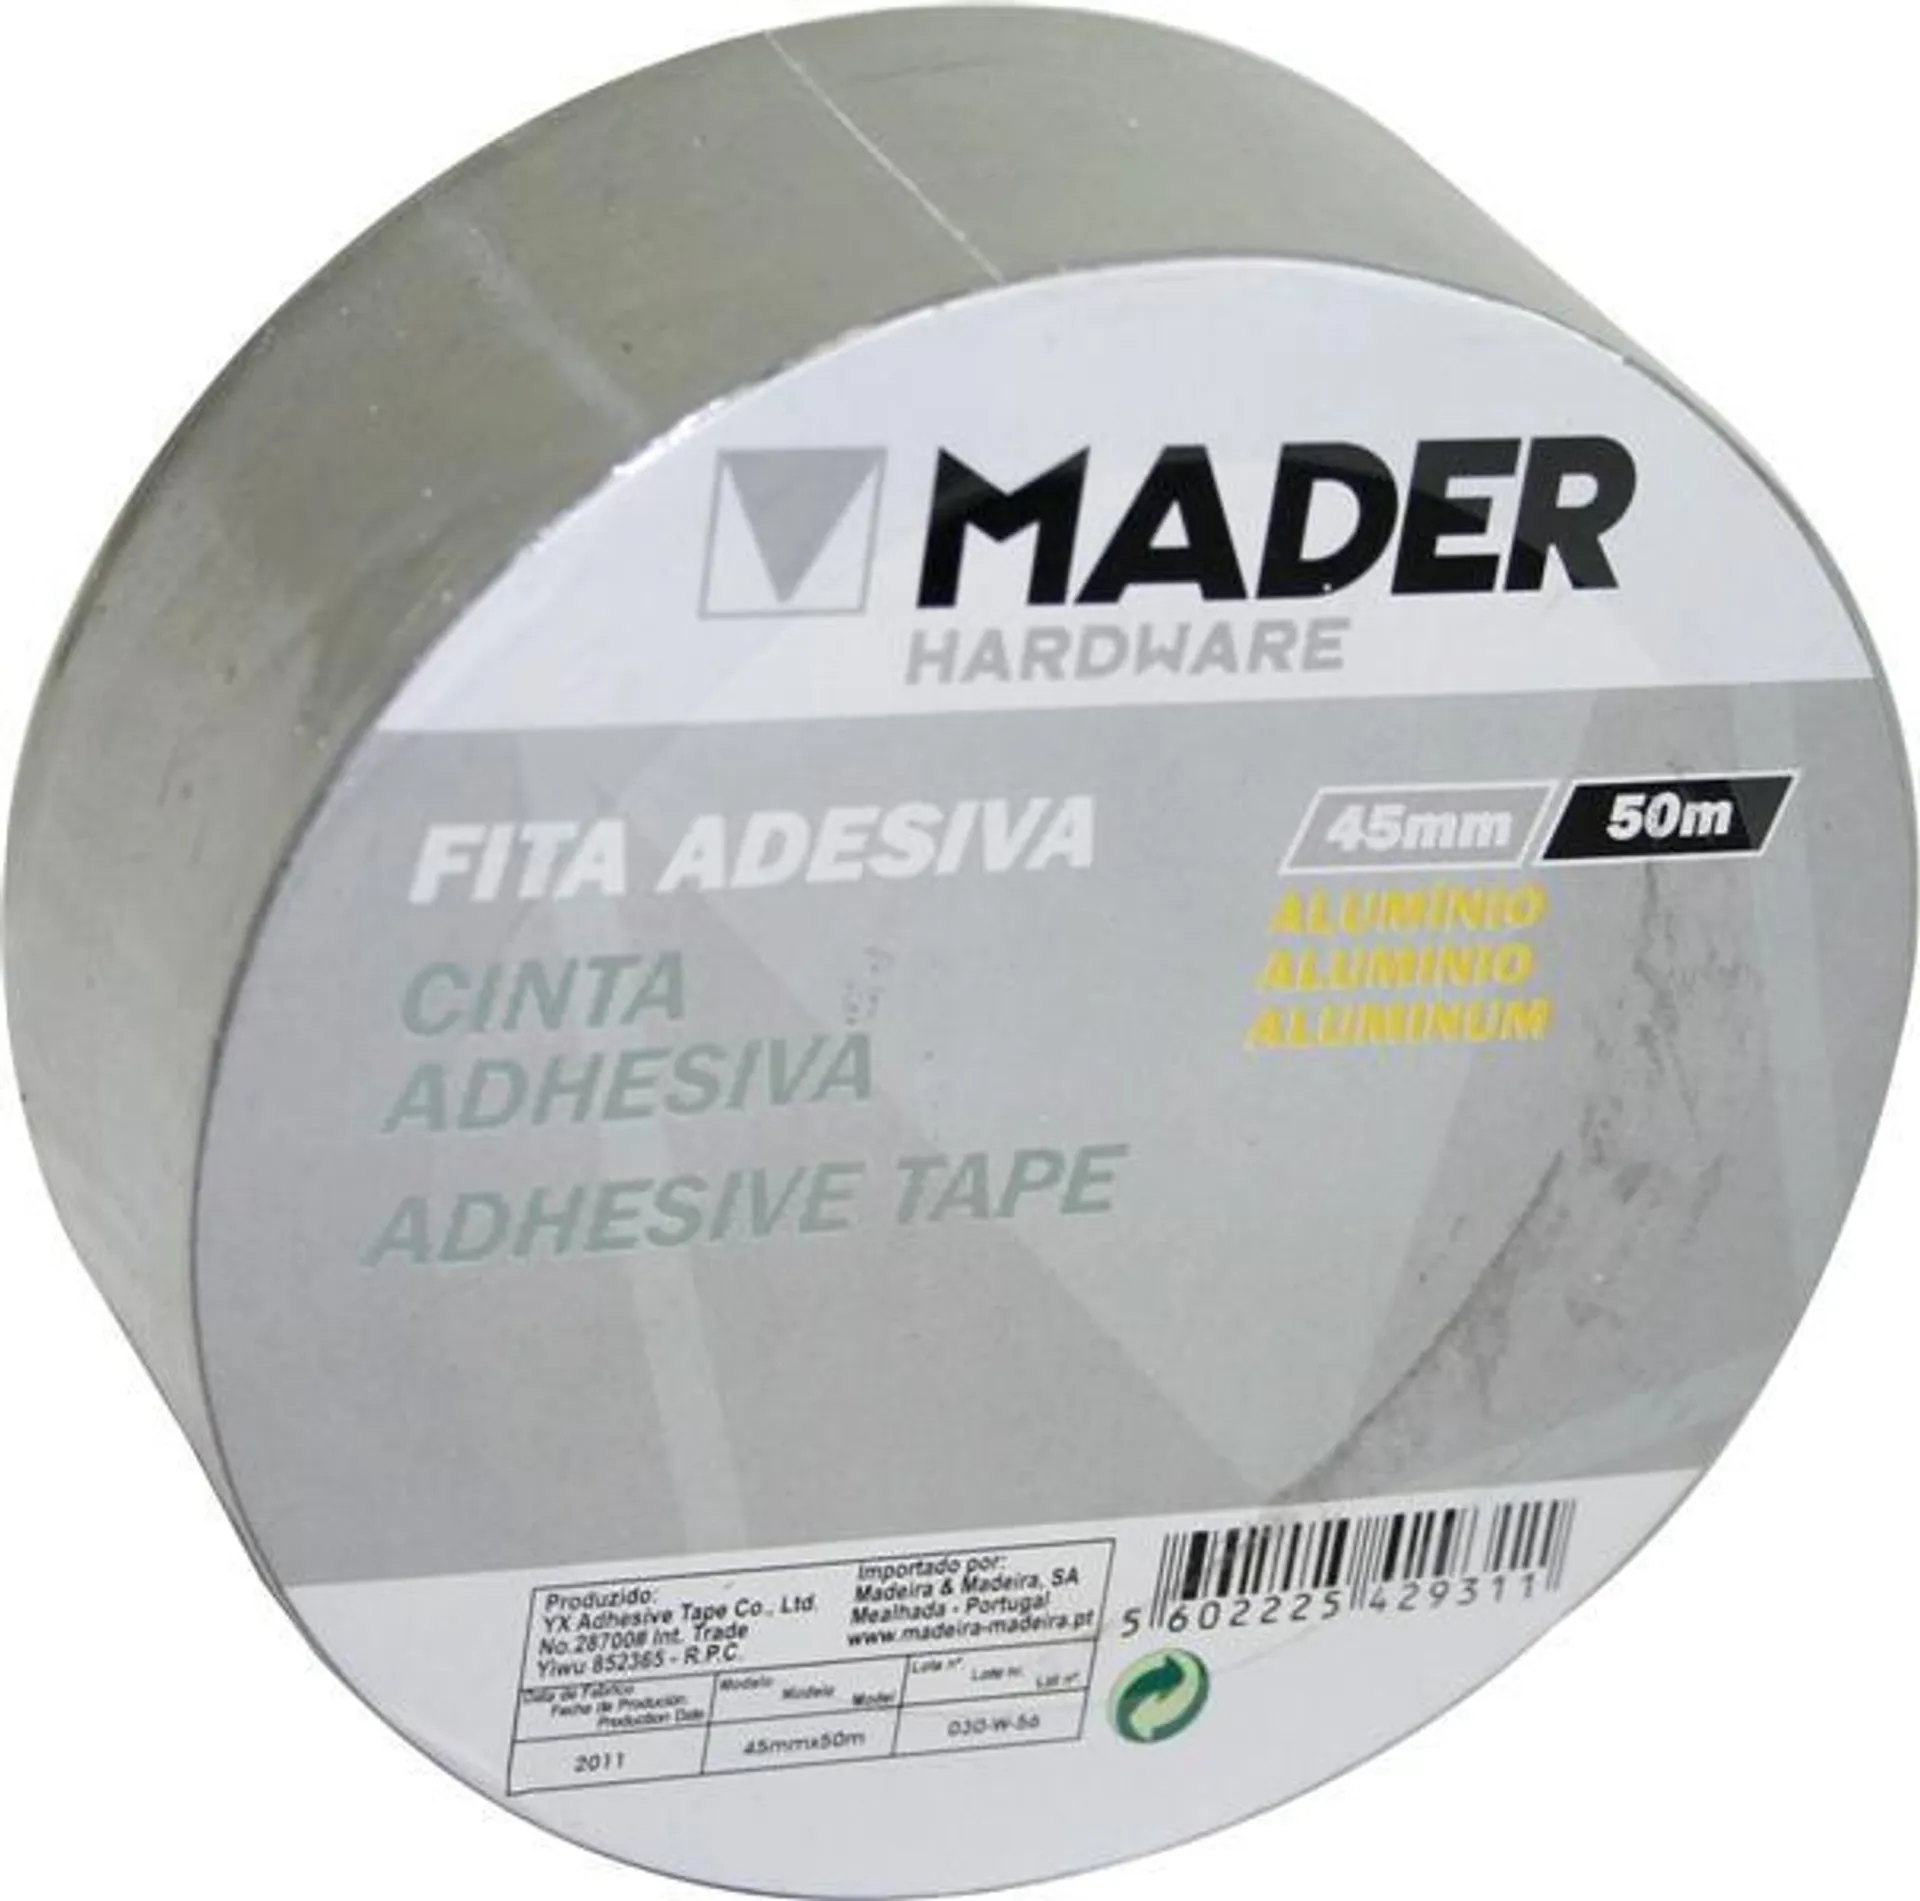 Fita Adesiva, Alumínio, 45mmx50m - MADER® | Hardware